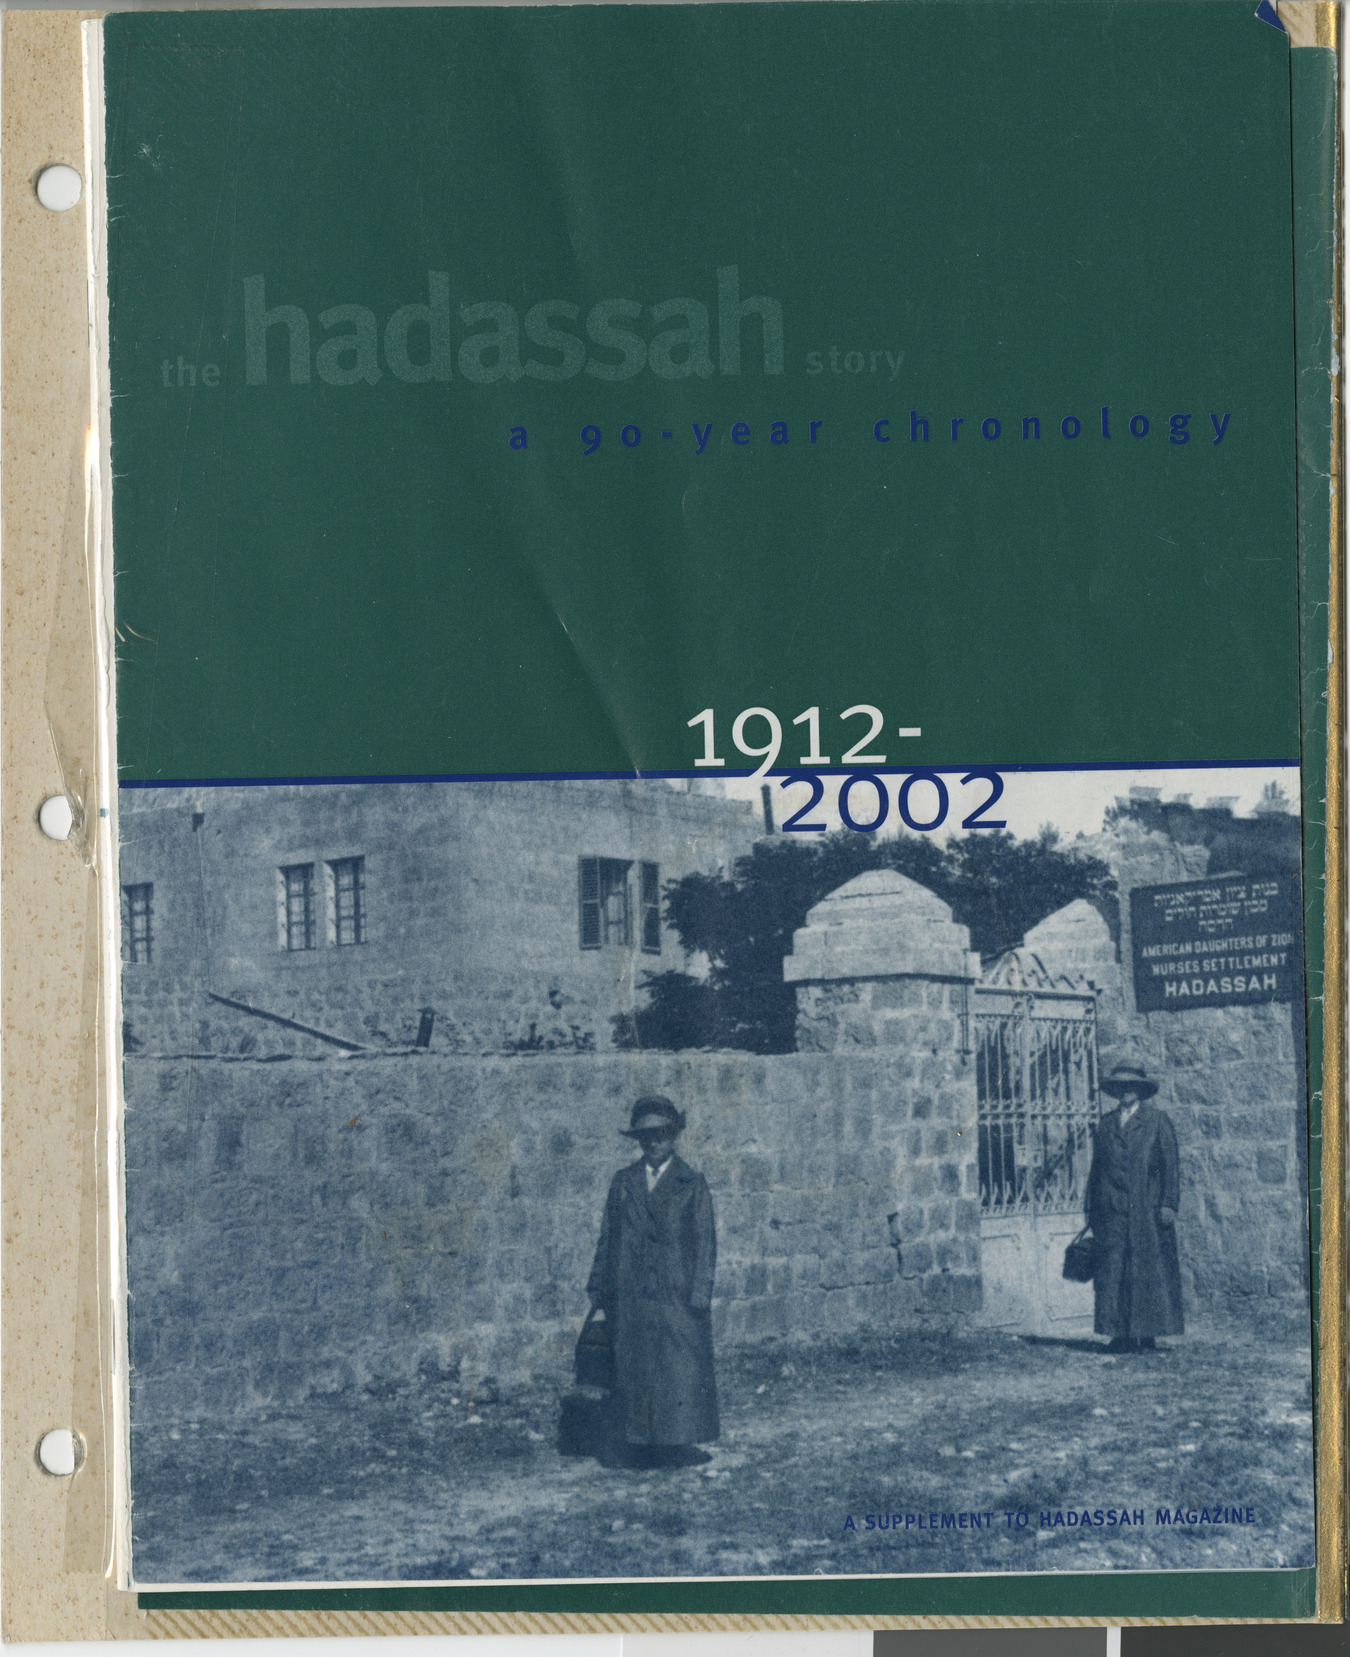 Supplement to Hadassah Magazine, The Hadassah Story: a 90 year chronology 1912-2002